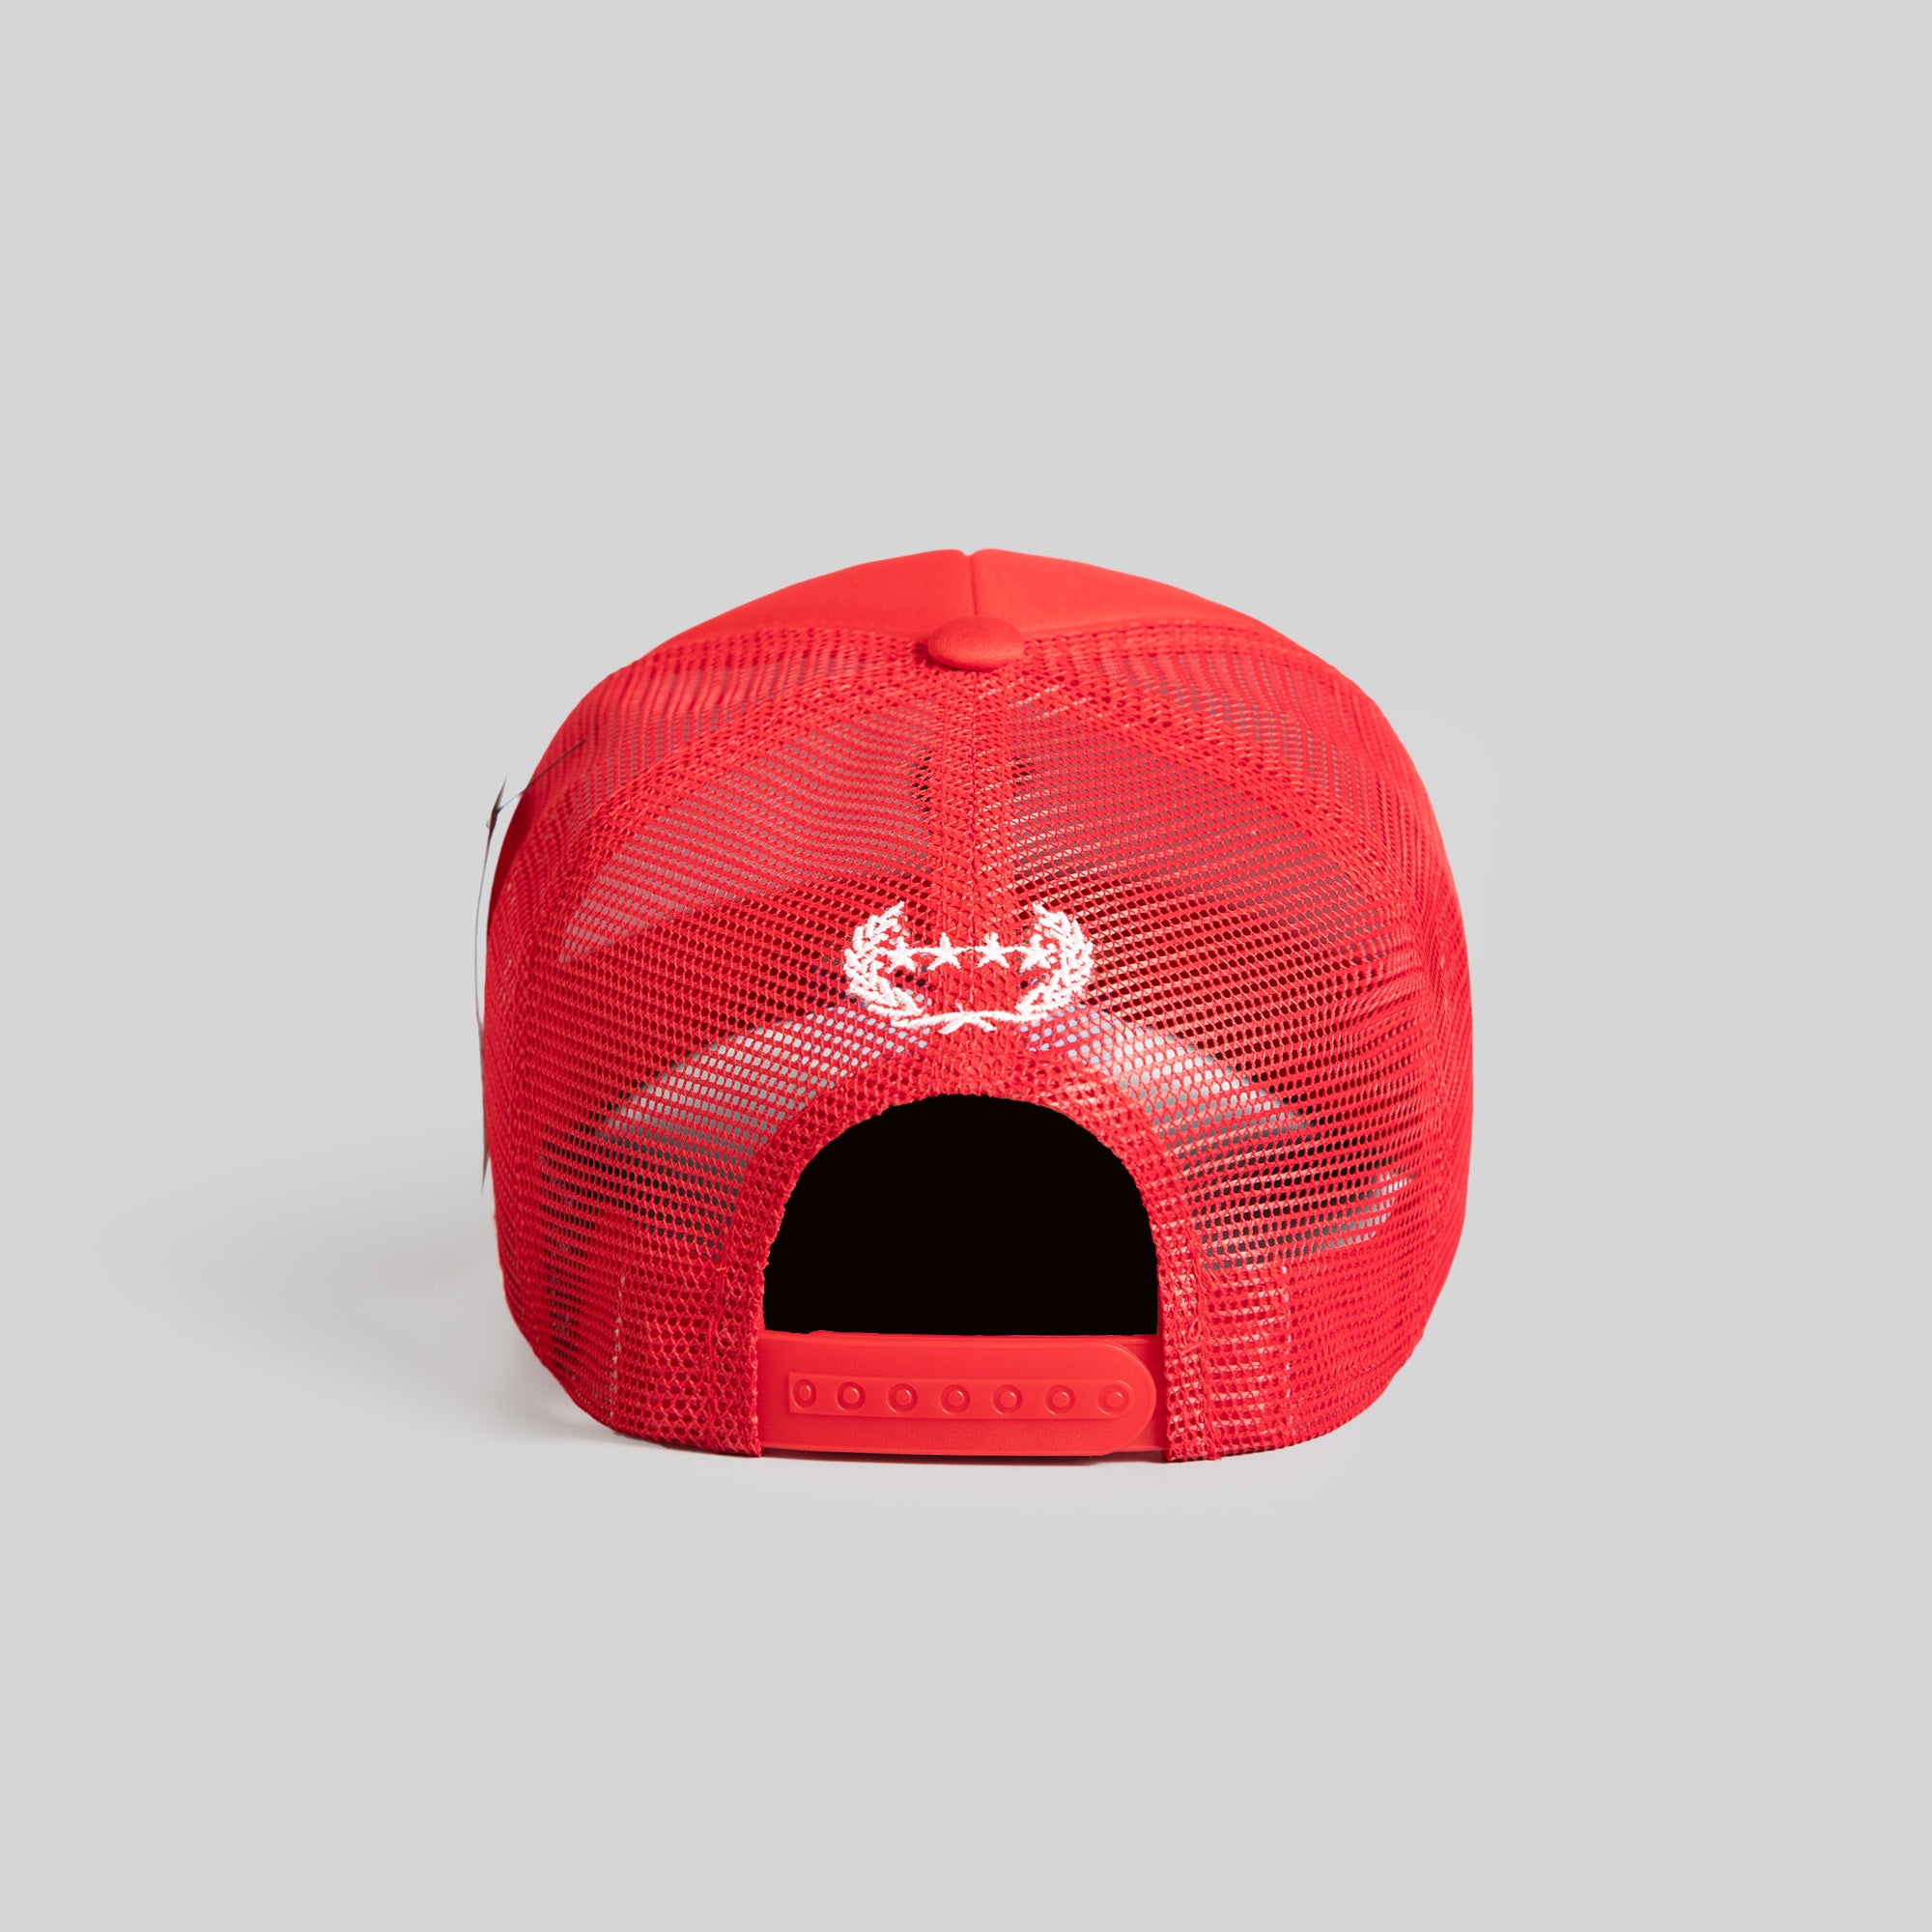 THINK DIFFERENT RED TRUCKER HAT